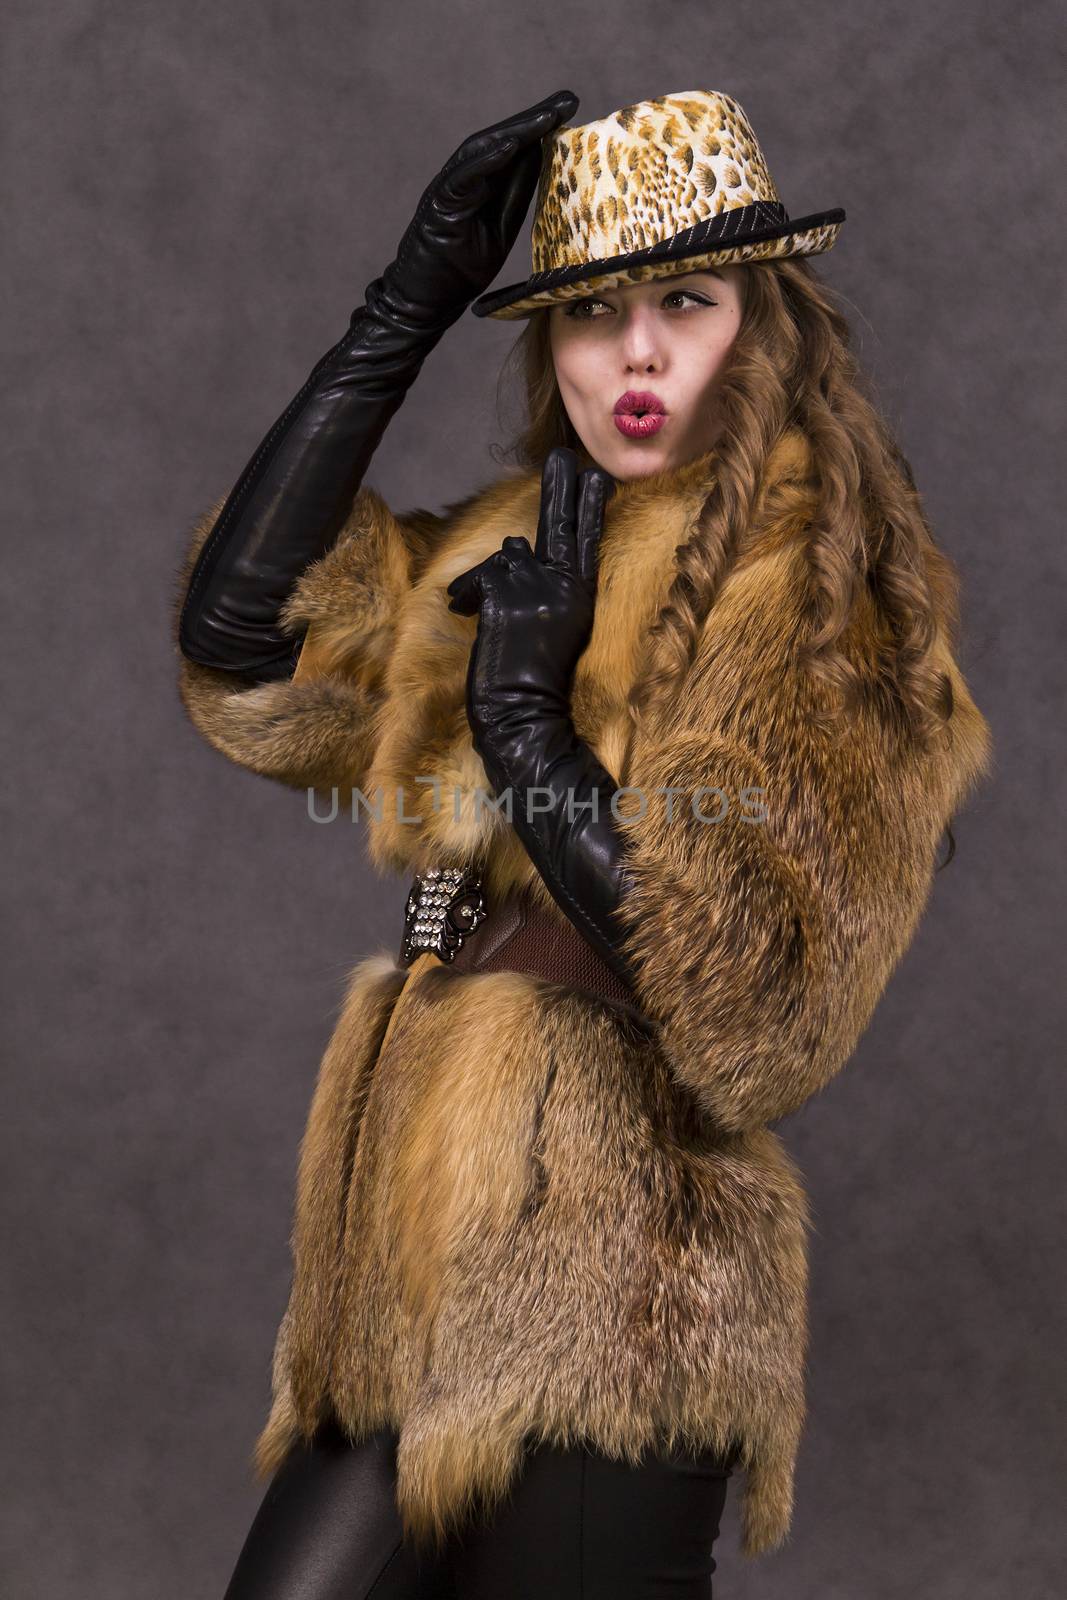 Girl model in fur coat and Leopard Hat posing on grey background in the Studio.